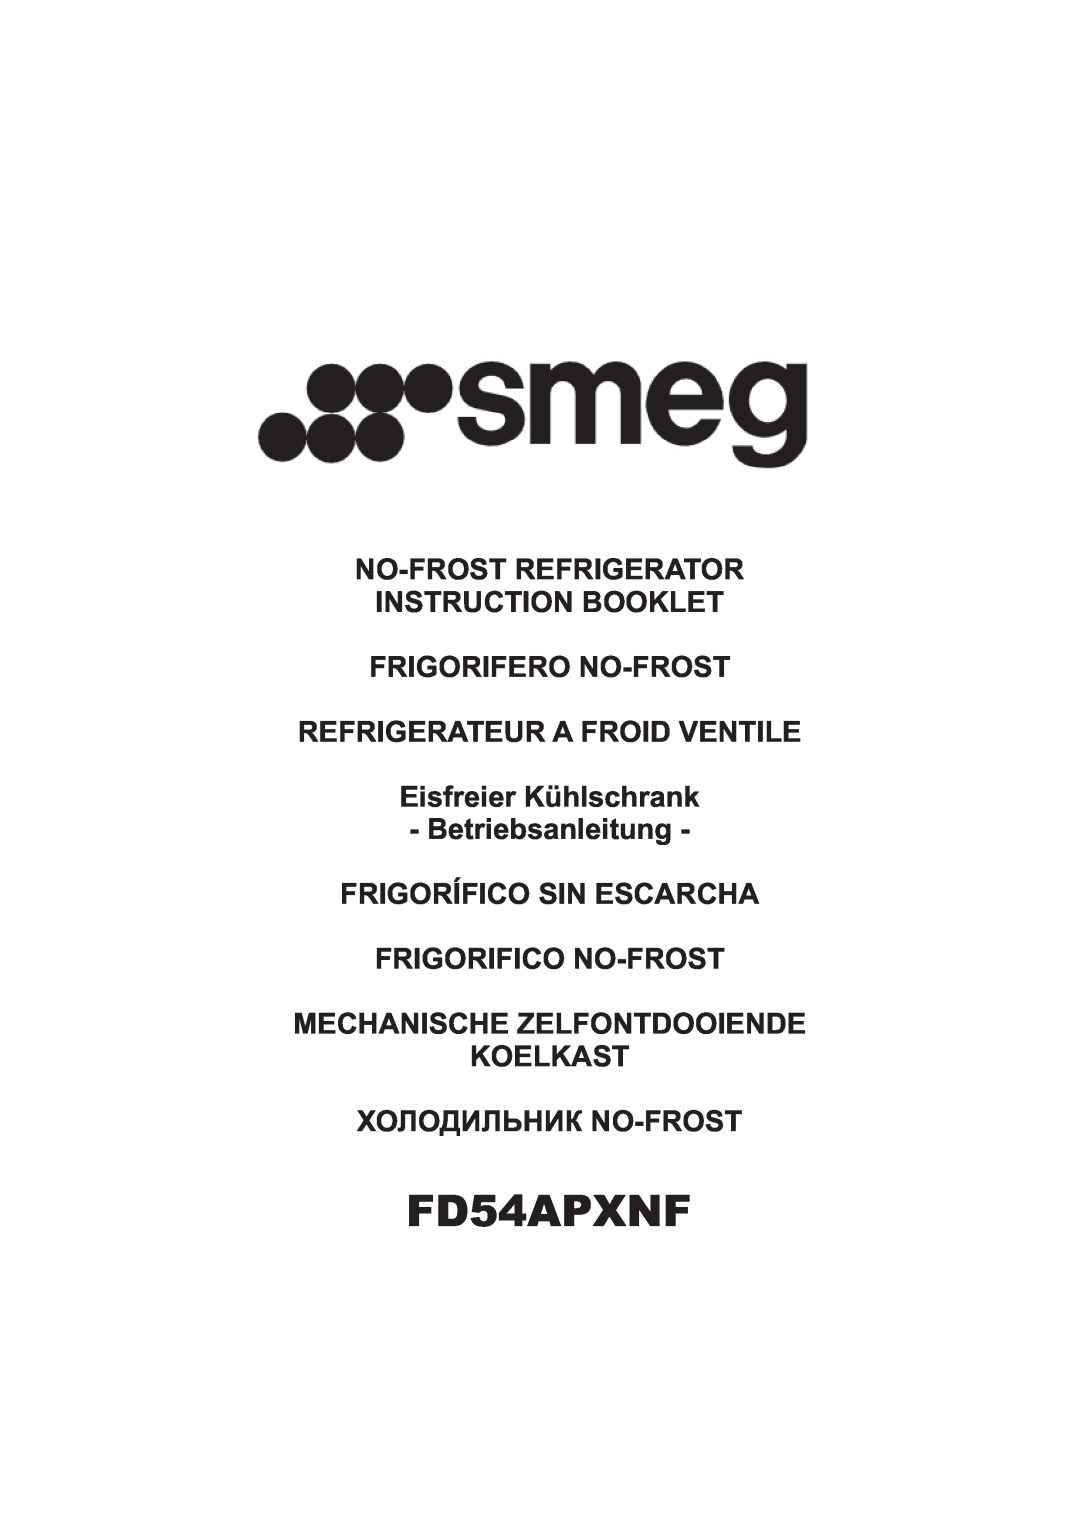 Smeg FD54APXNF manual No-Frostrefrigerator Instruction Booklet, Frigorifero No-Frost, Refrigerateur A Froid Ventile 